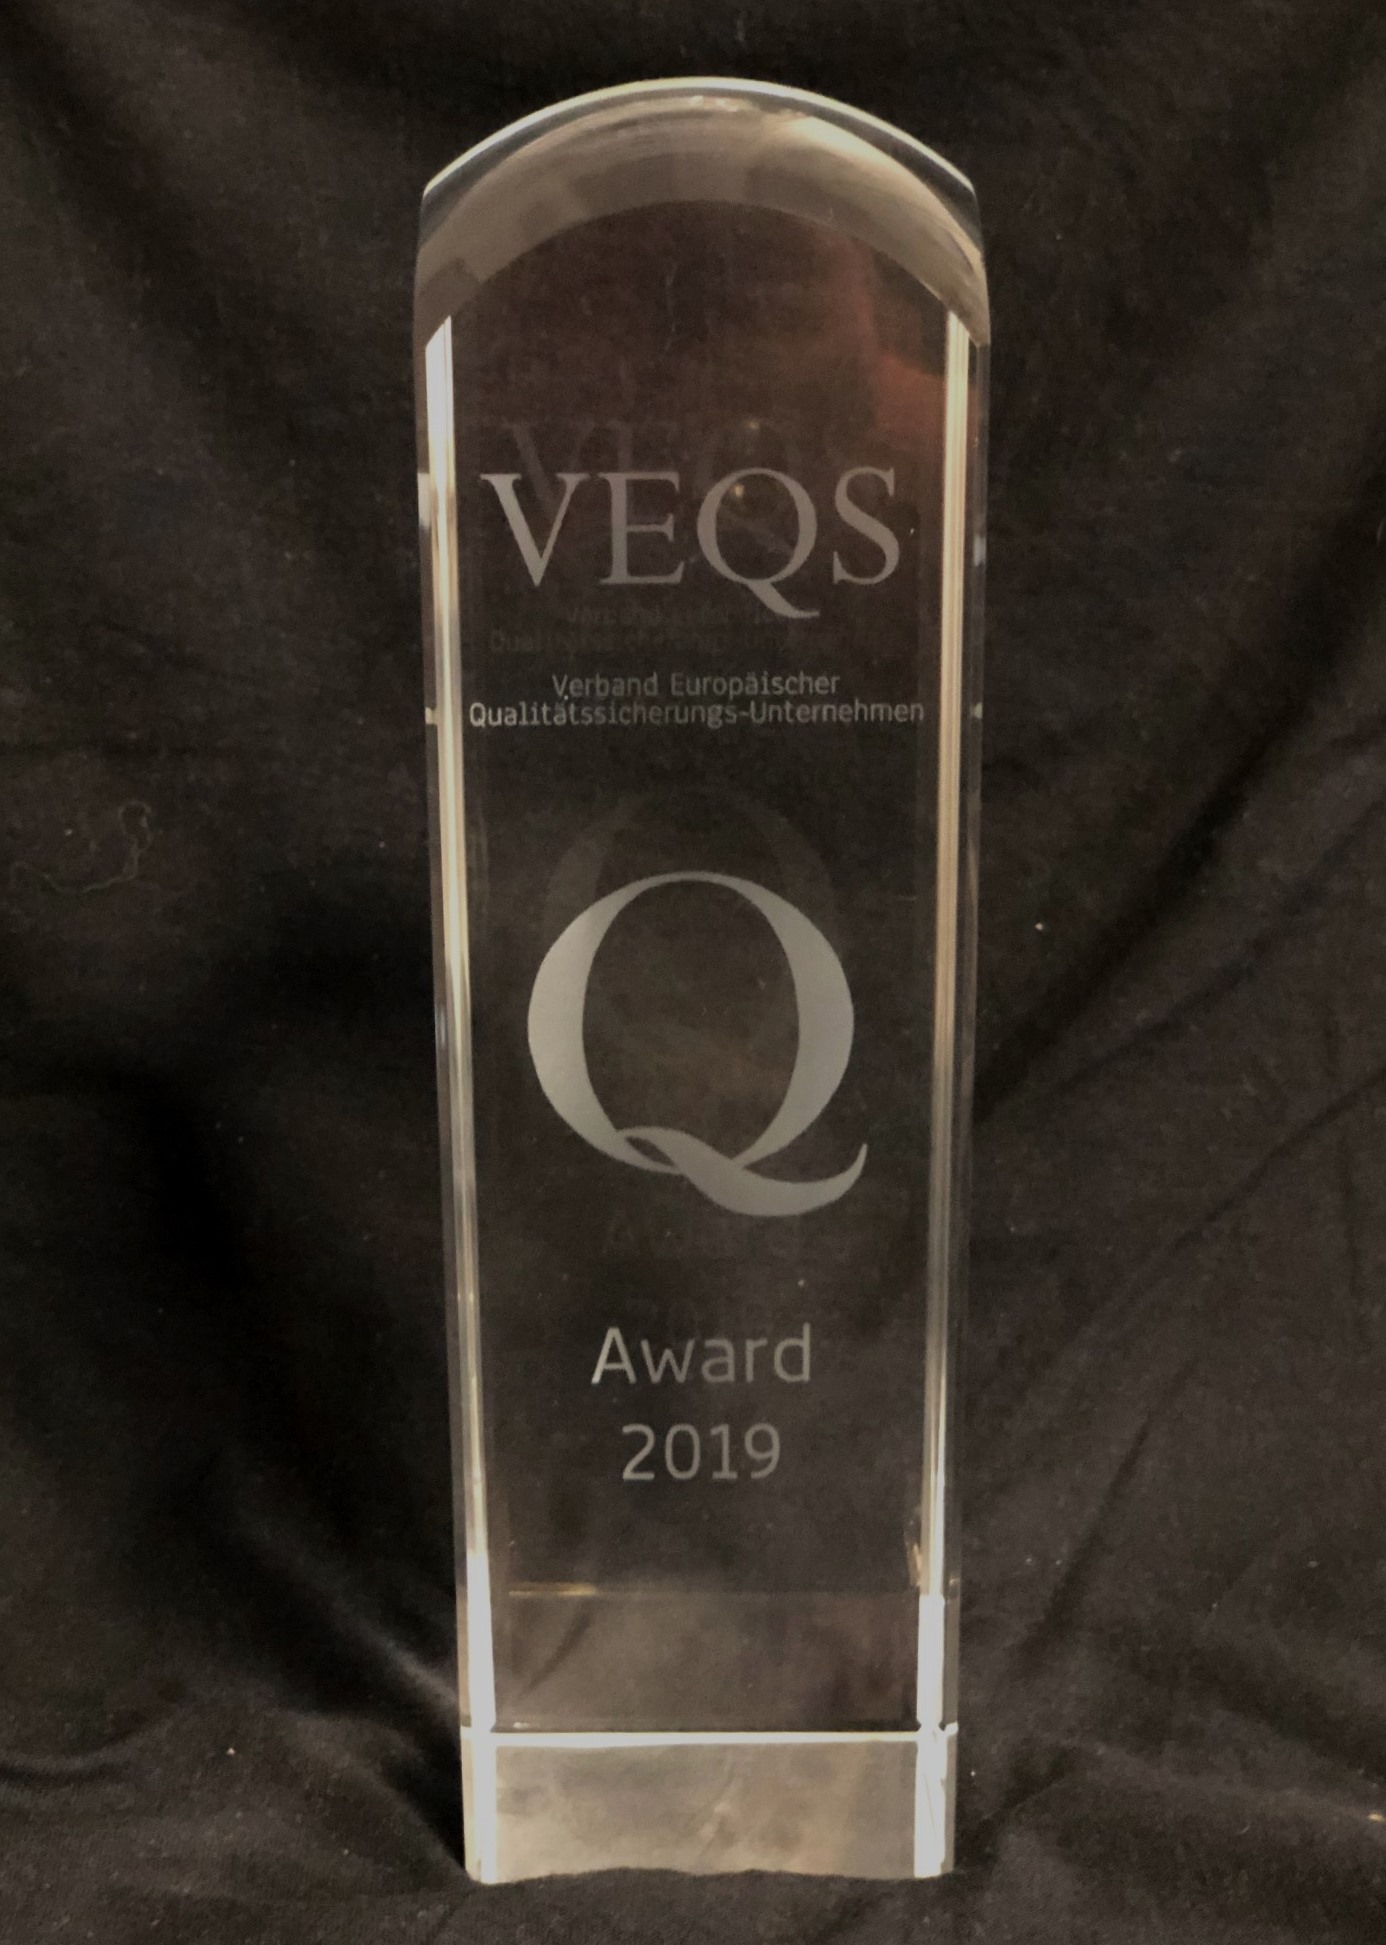 VEQS Award 2019